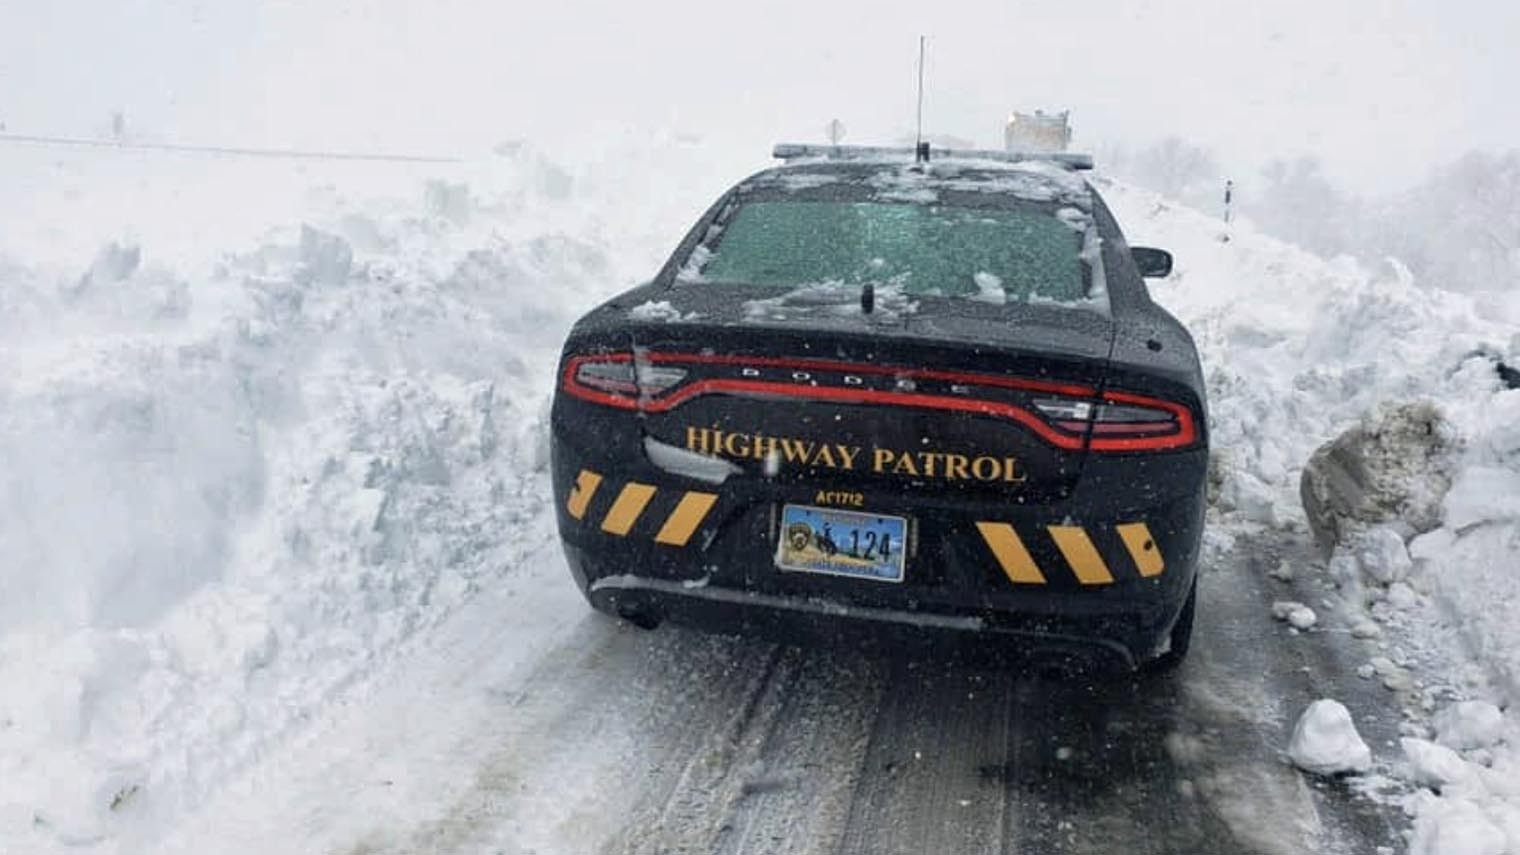 Highway patrol snow